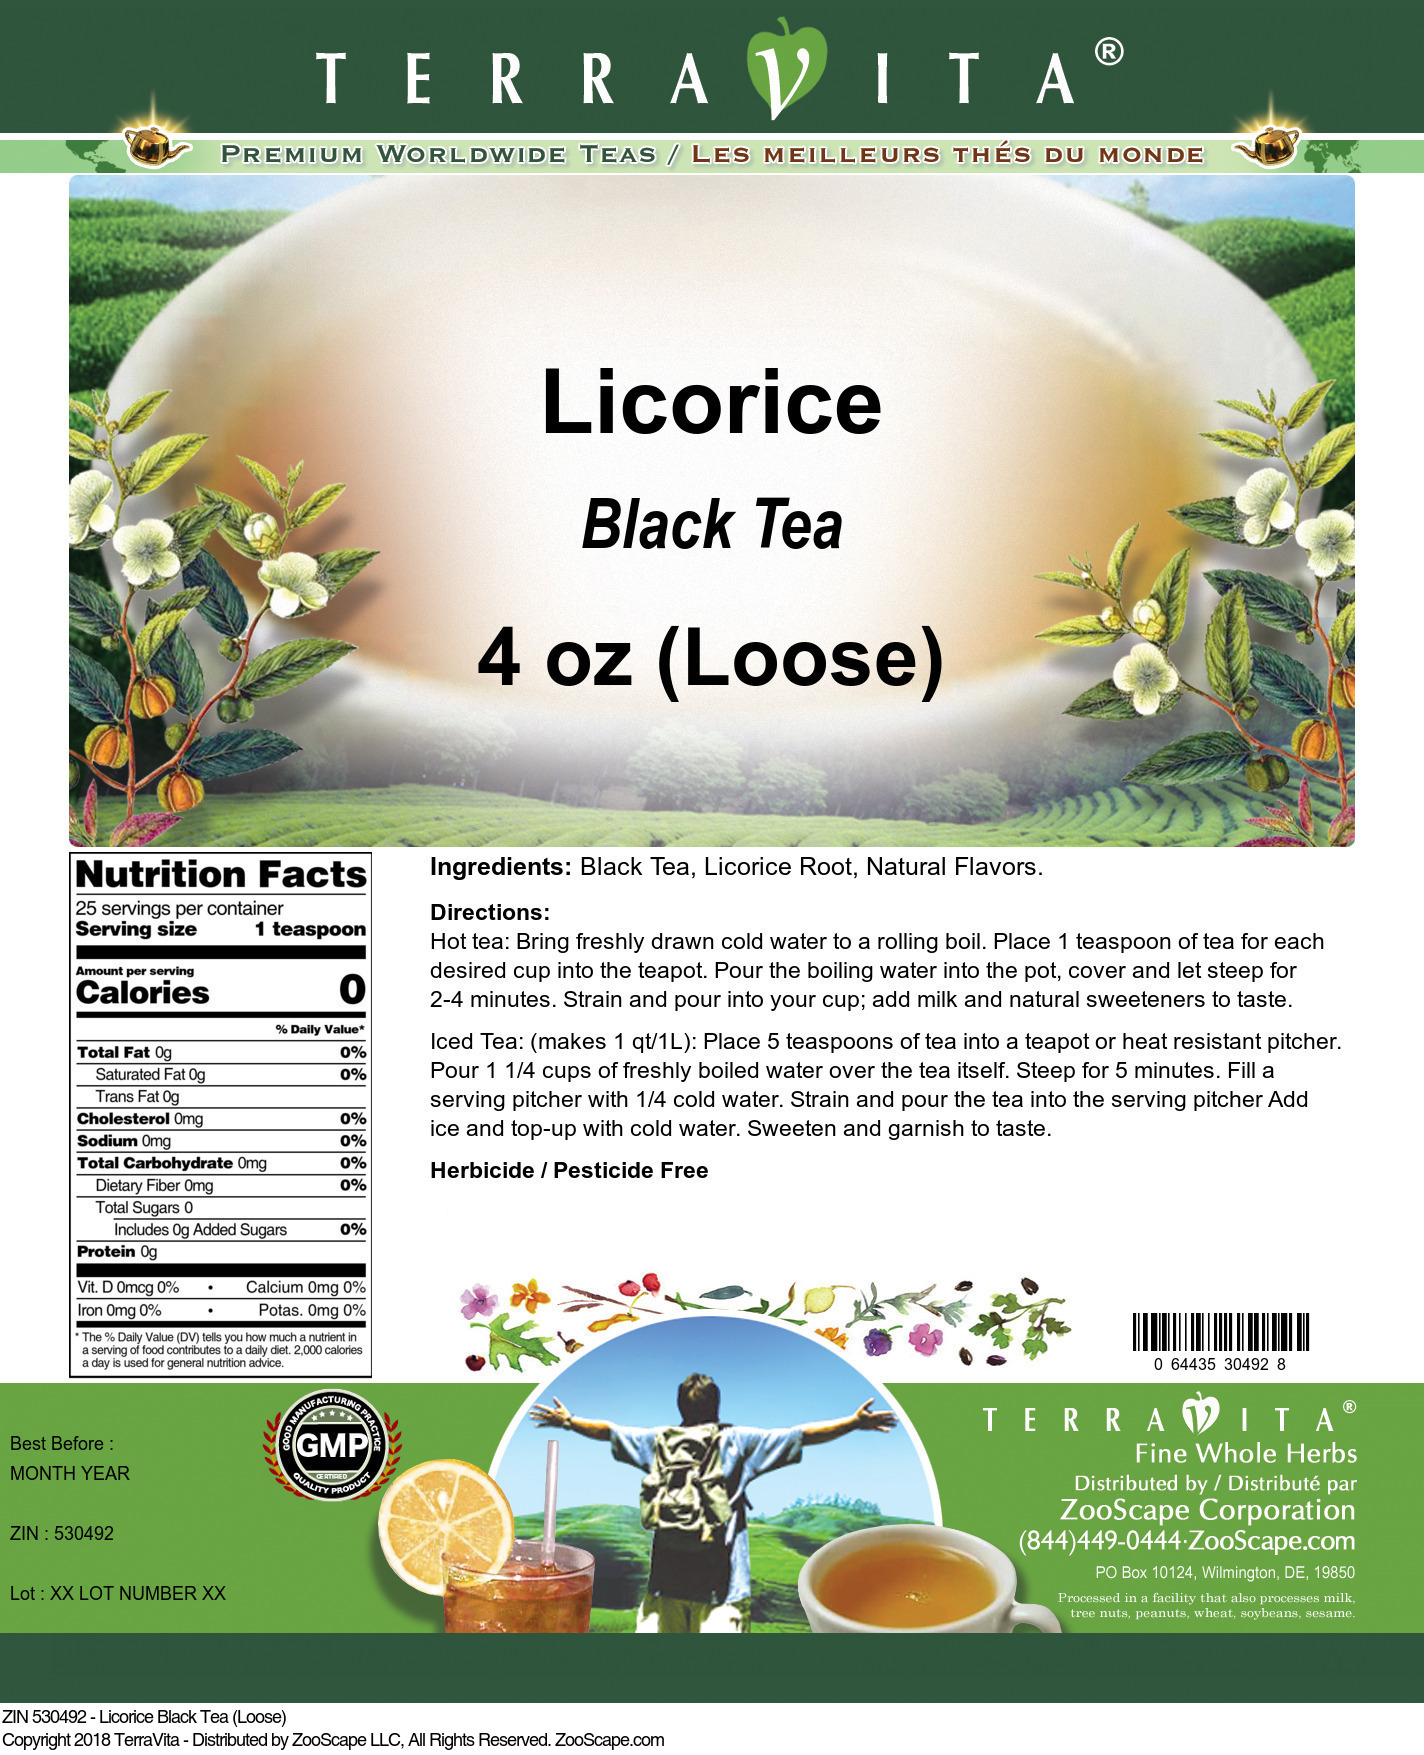 Licorice Black Tea (Loose) - Label